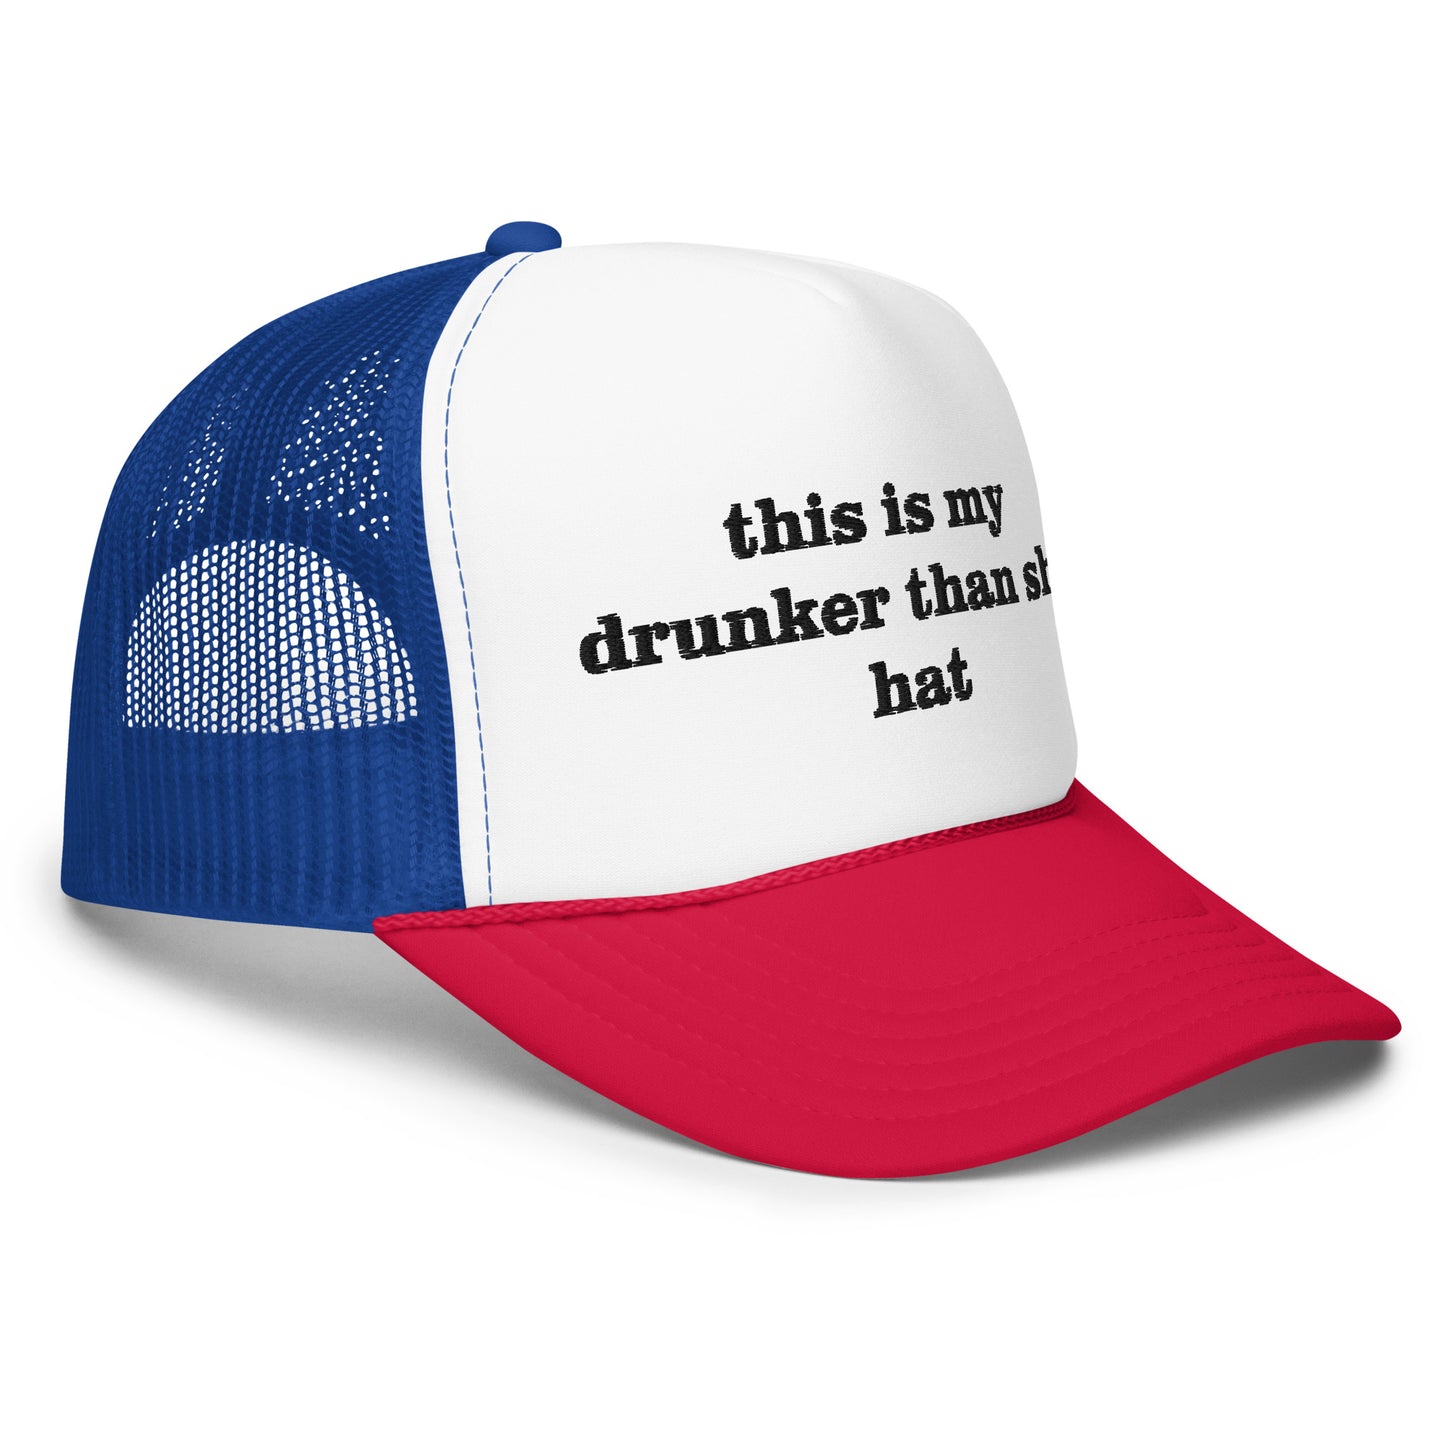 drunker than shit hat